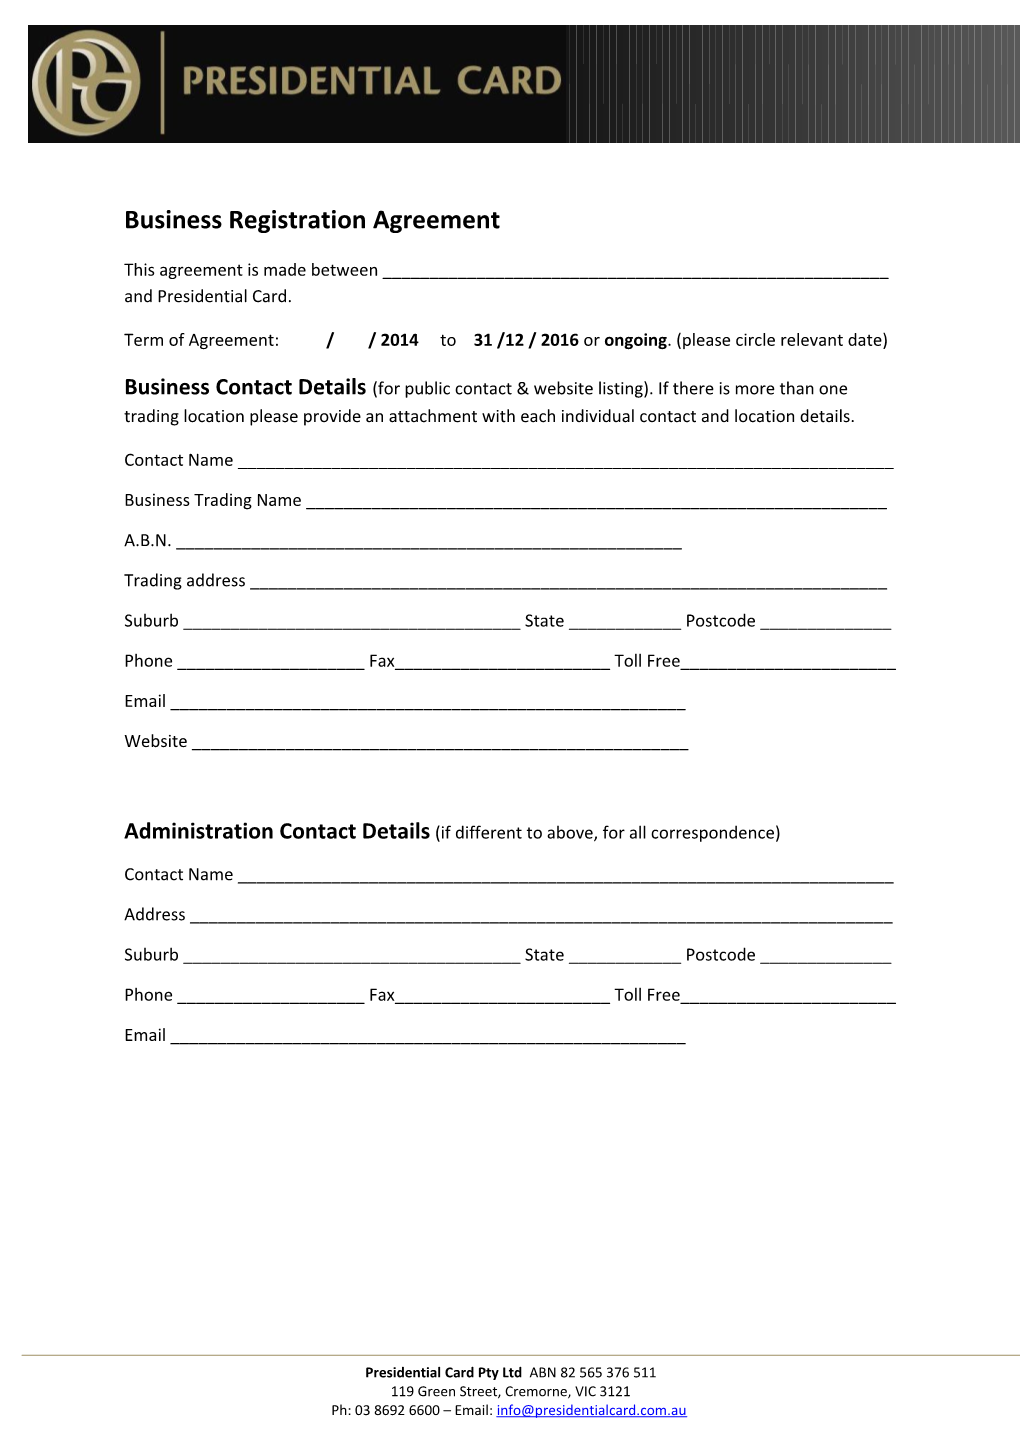 Business Registration Agreement